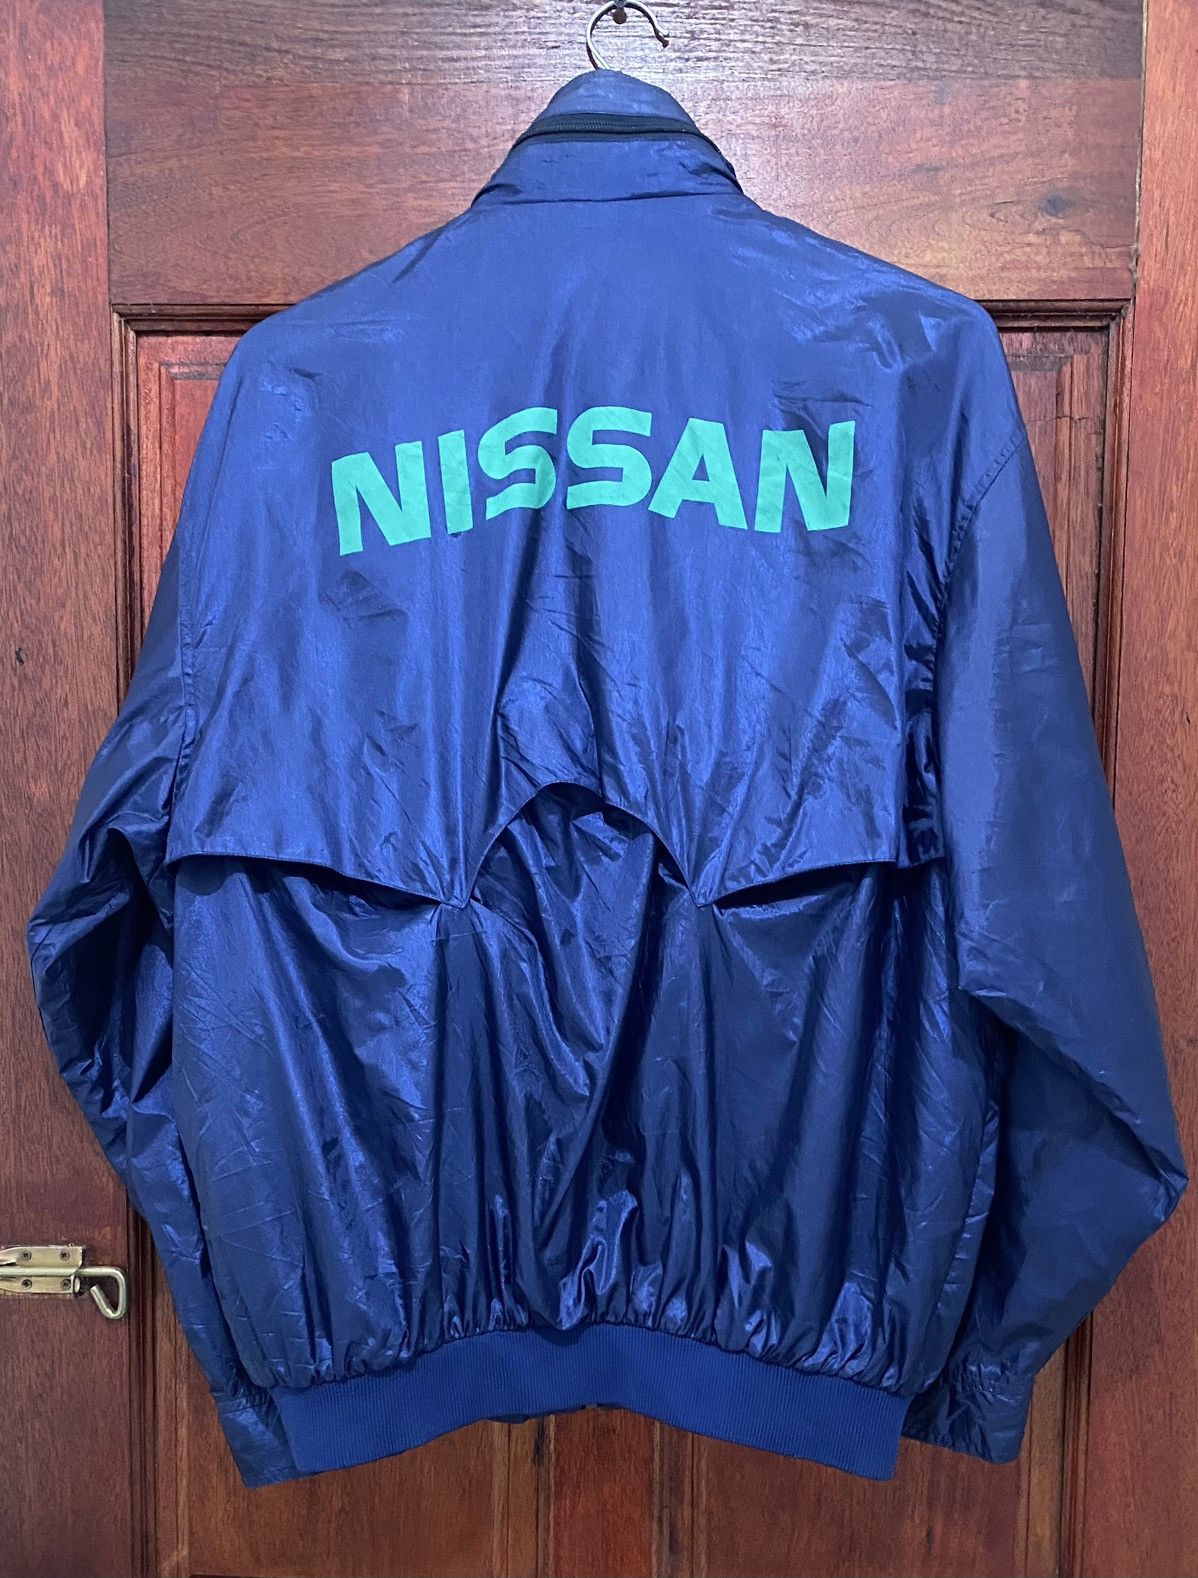 Sports Specialties - Vintage Nissan Bomber Jacket Hidden Hoodie - 1